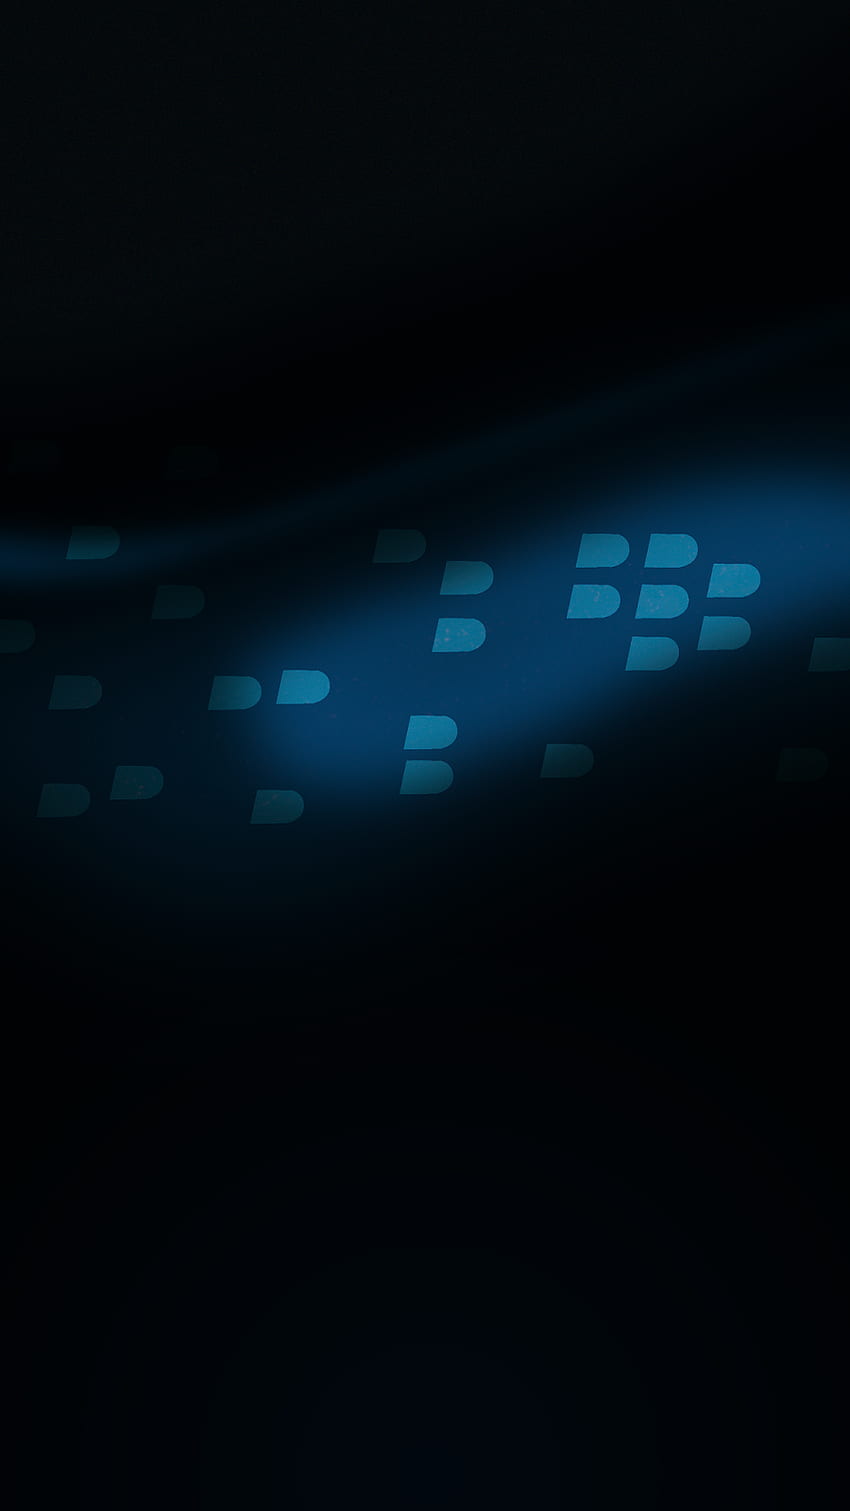 Logo Blackberry wallpaper ponsel HD